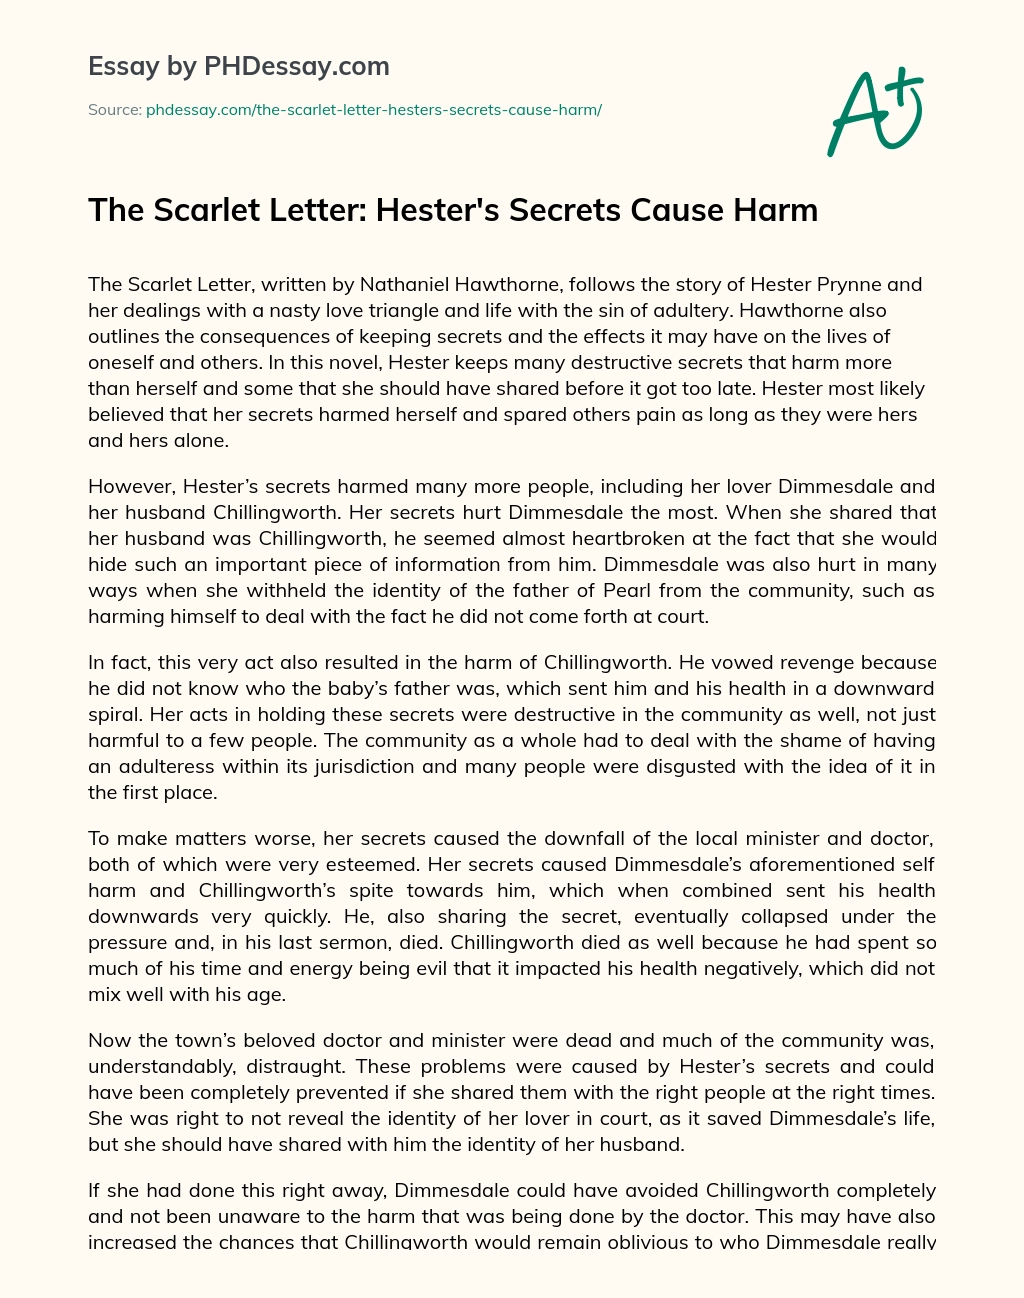 The Scarlet Letter: Hester’s Secrets Cause Harm essay